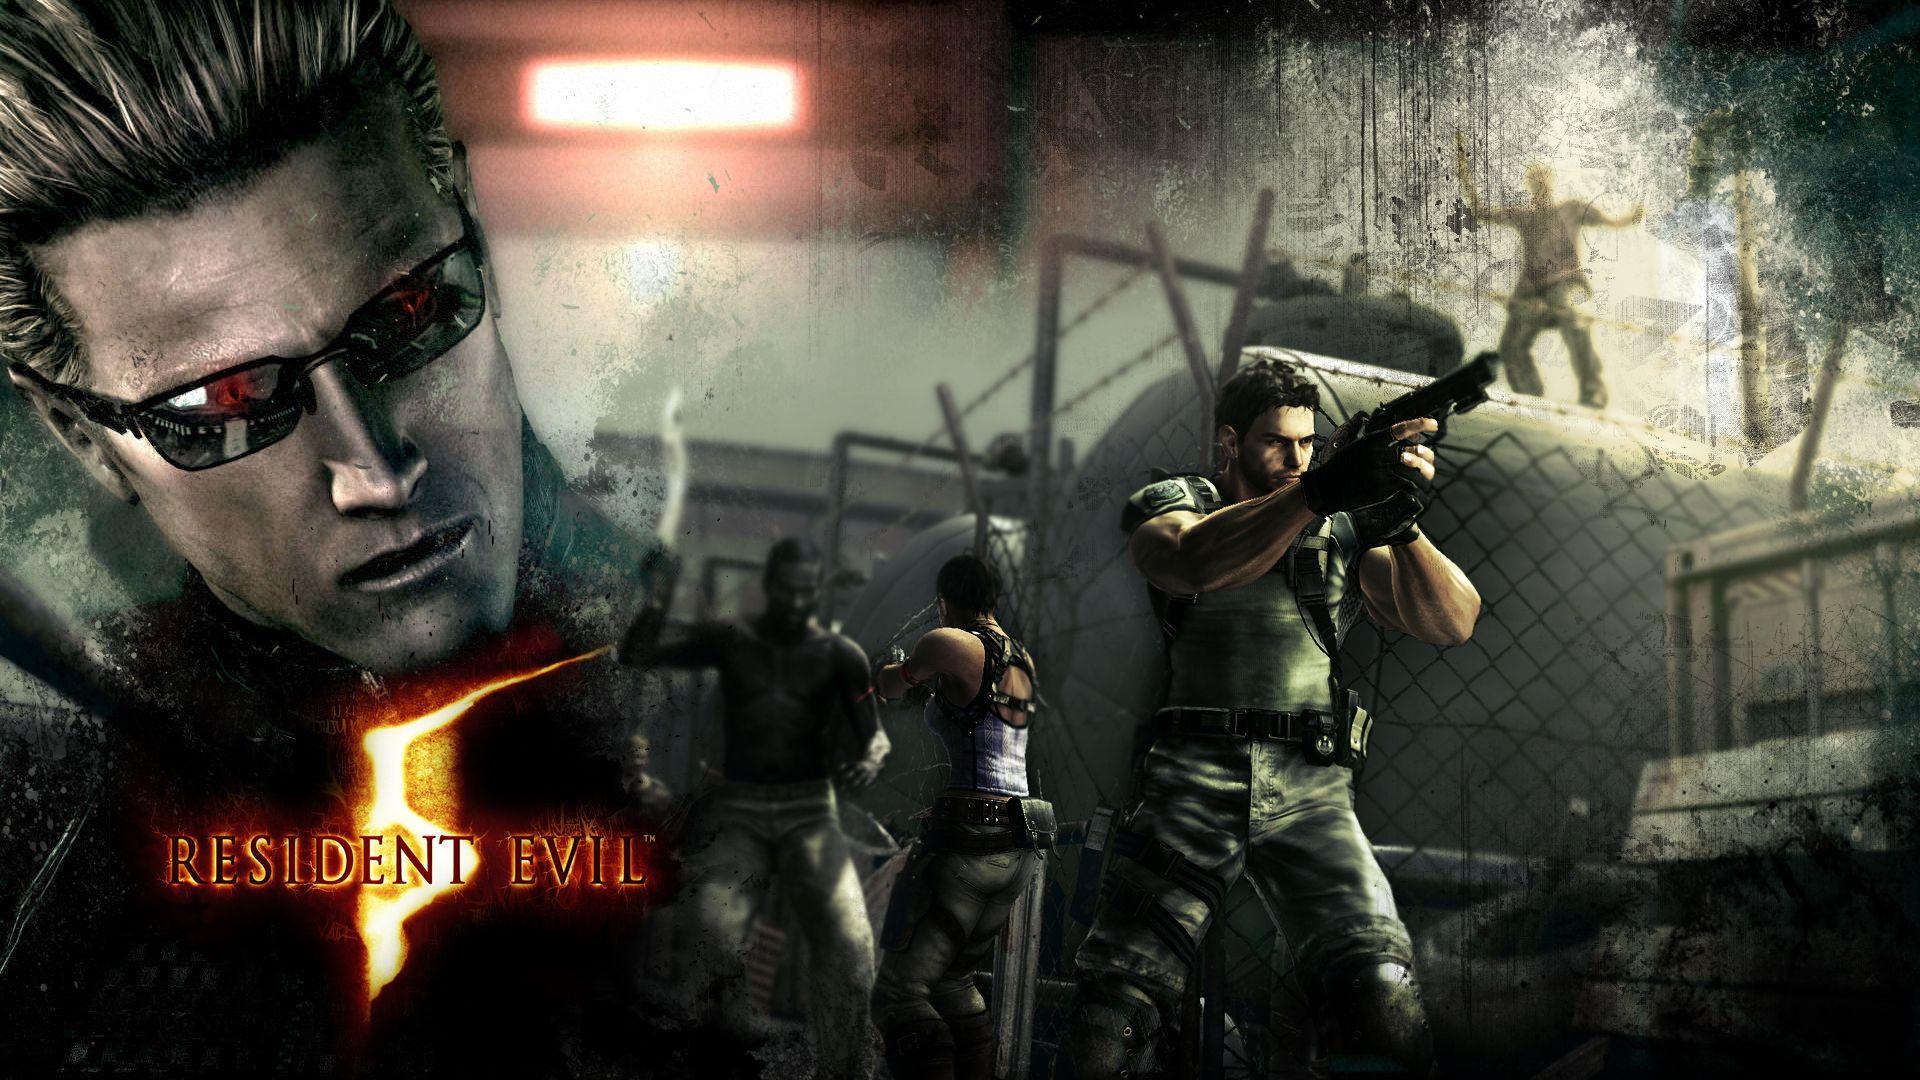 Games Resident Evil 5 Game wallpaper Desktop, Phone, Tablet